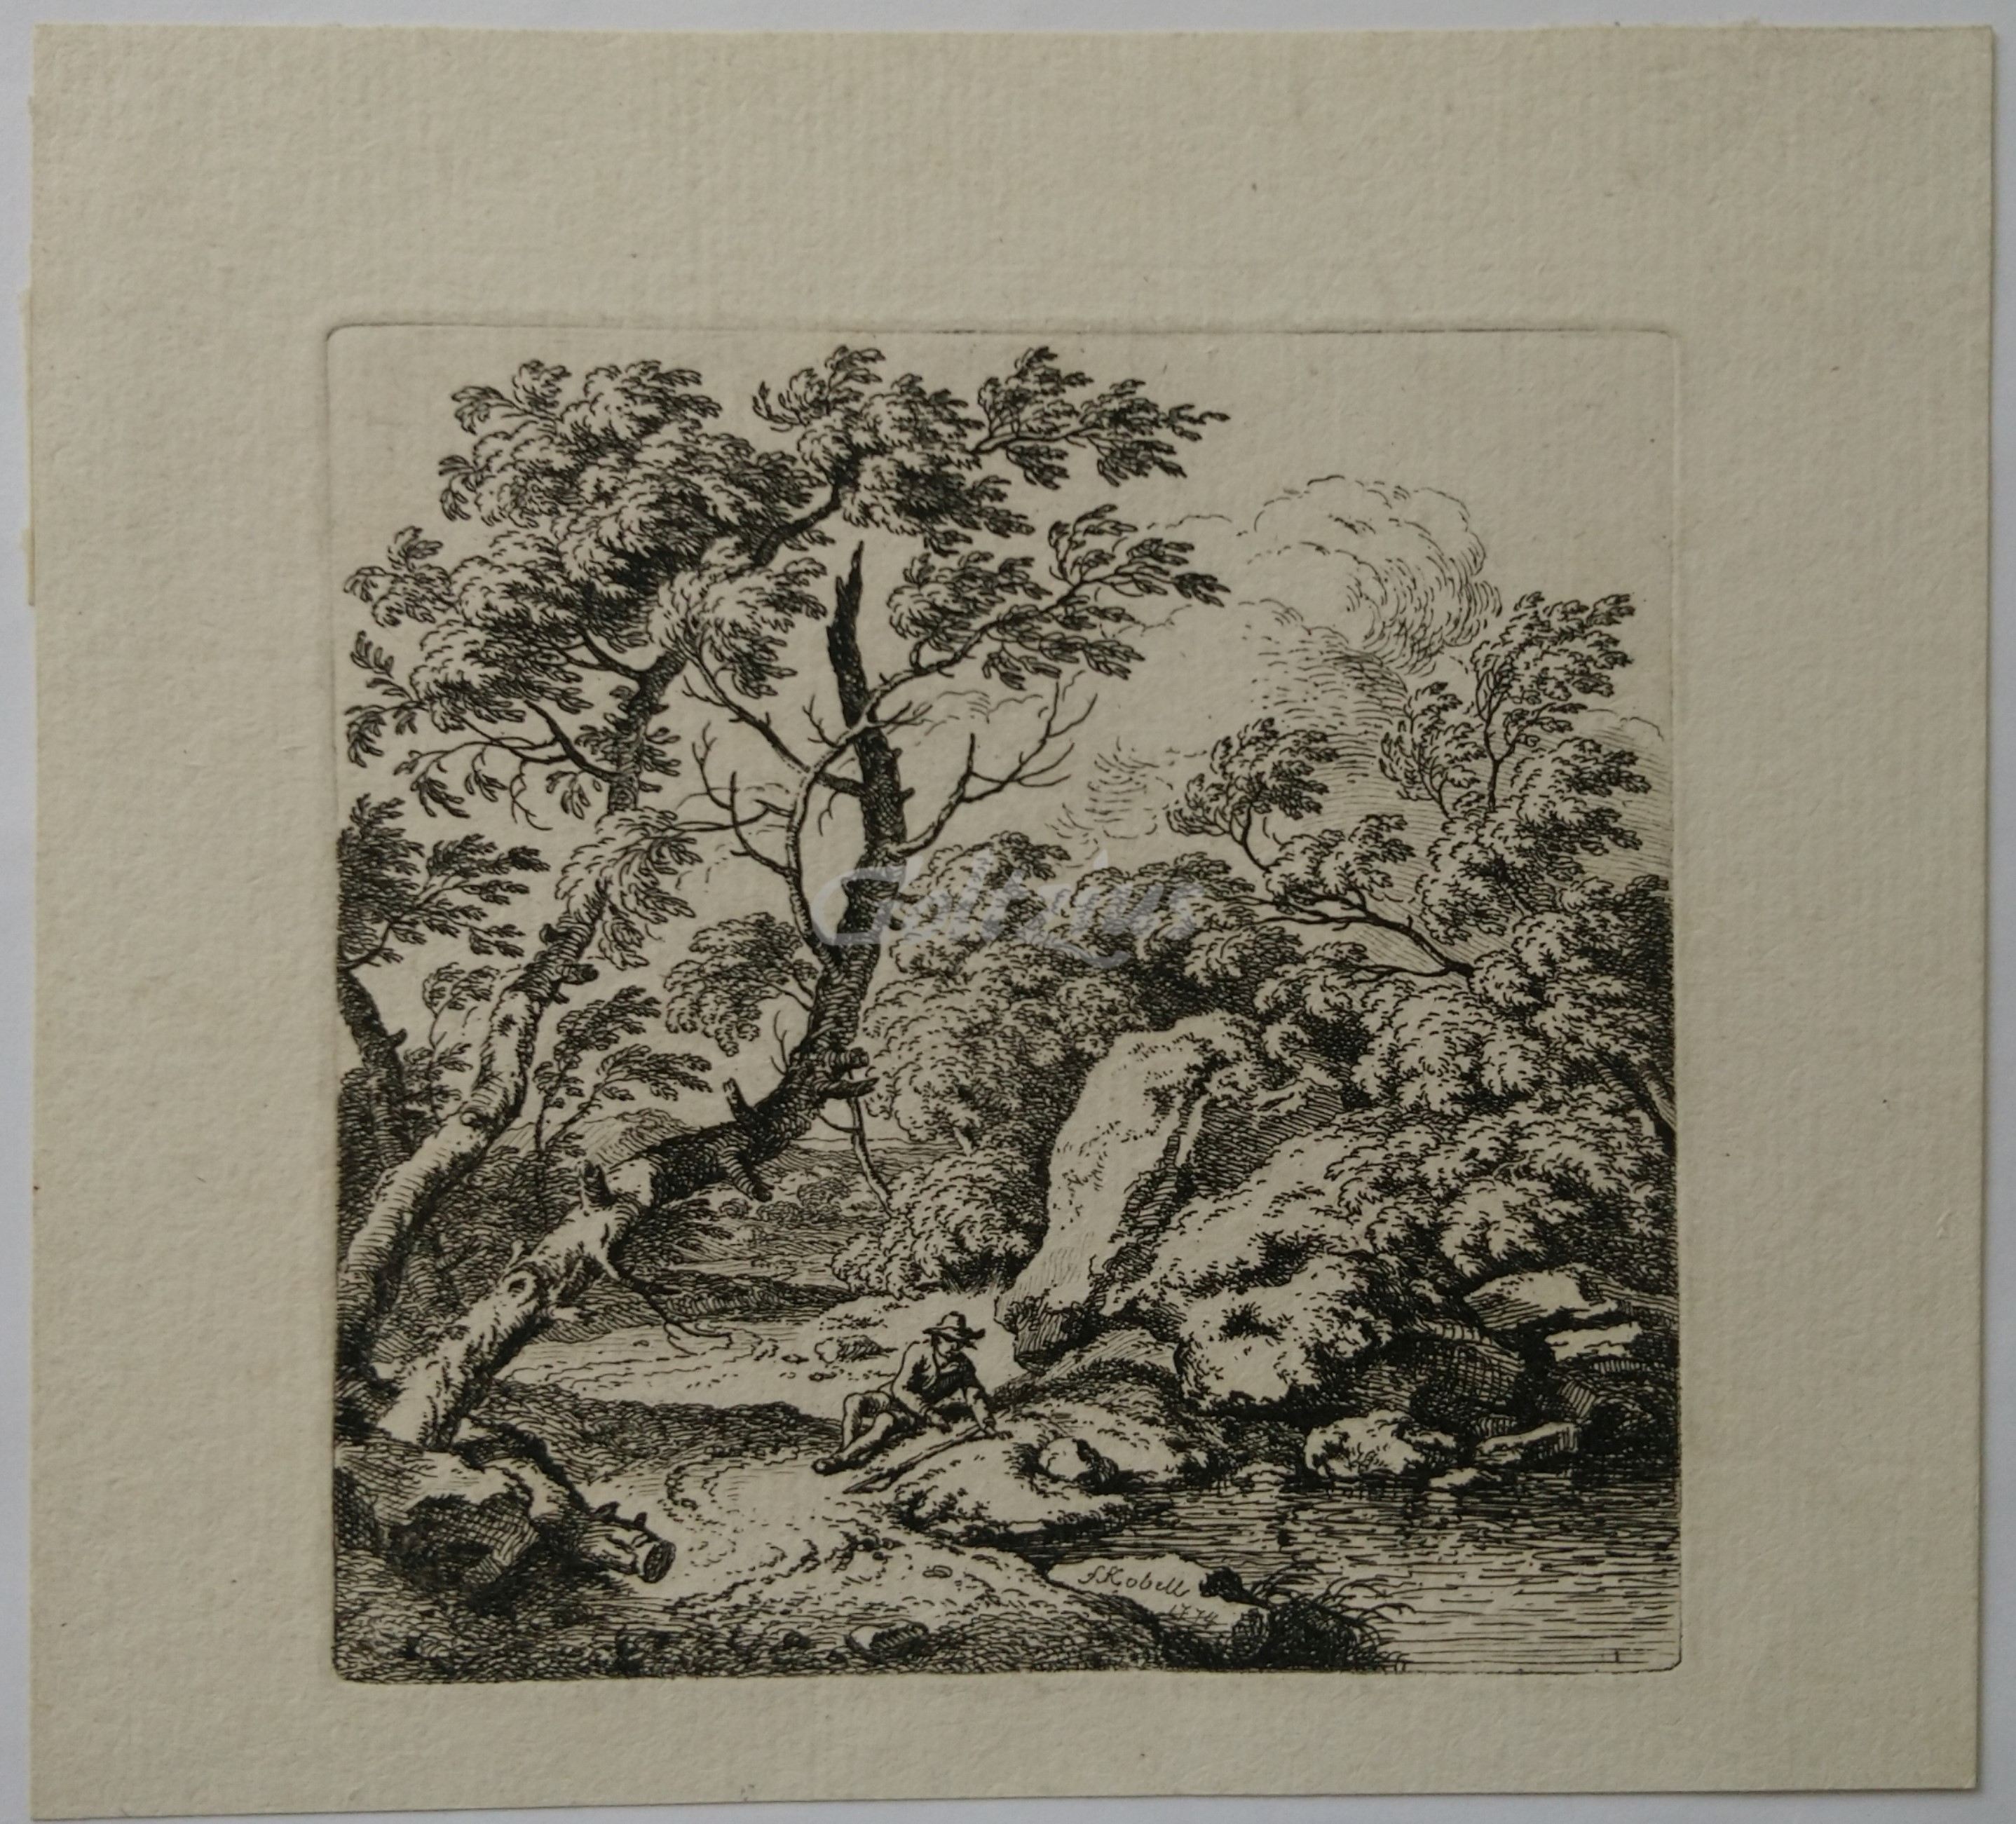 KOBELL, FERDINAND, Landscape with resting figure near a pond